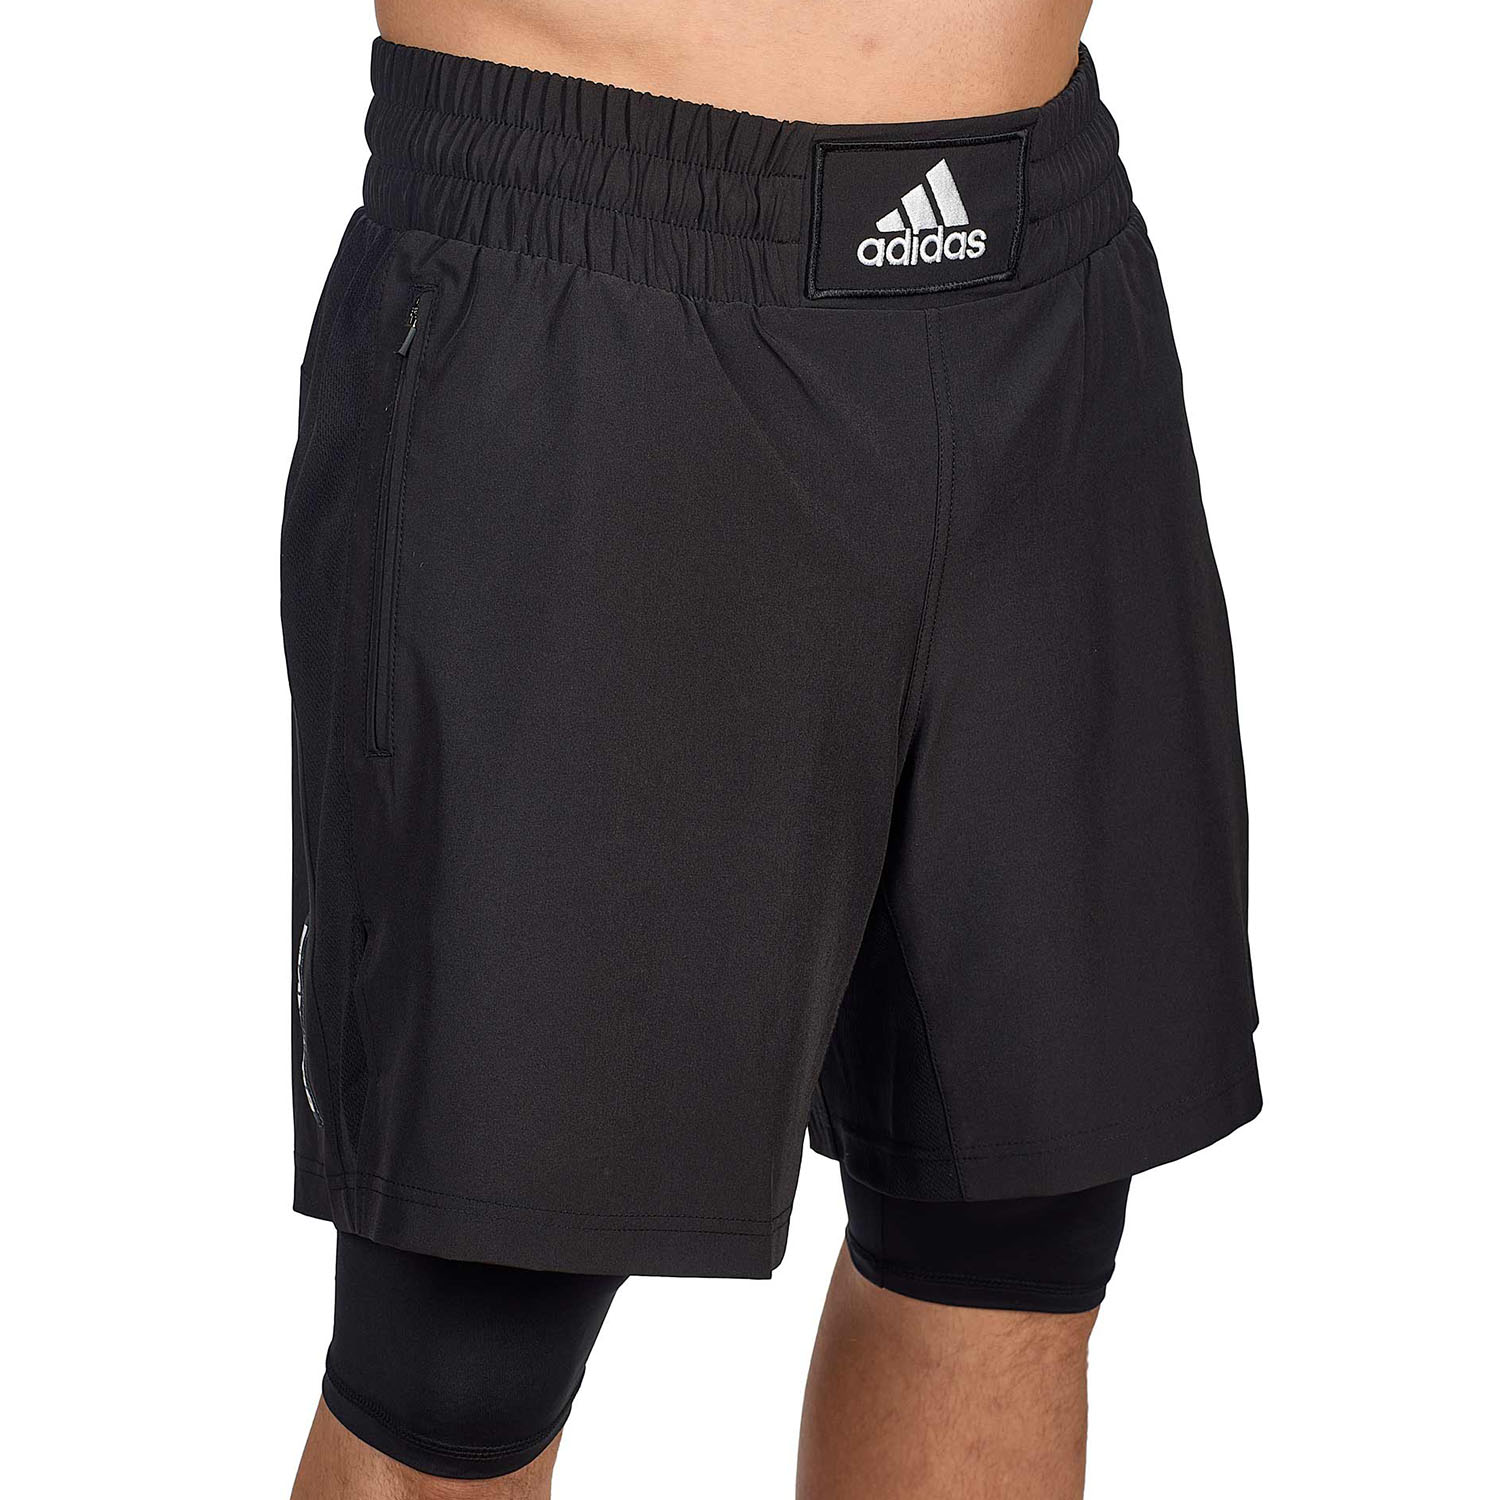 adidas Fitness Shorts, Tights Boxwear Tech, schwarz-weiß, M